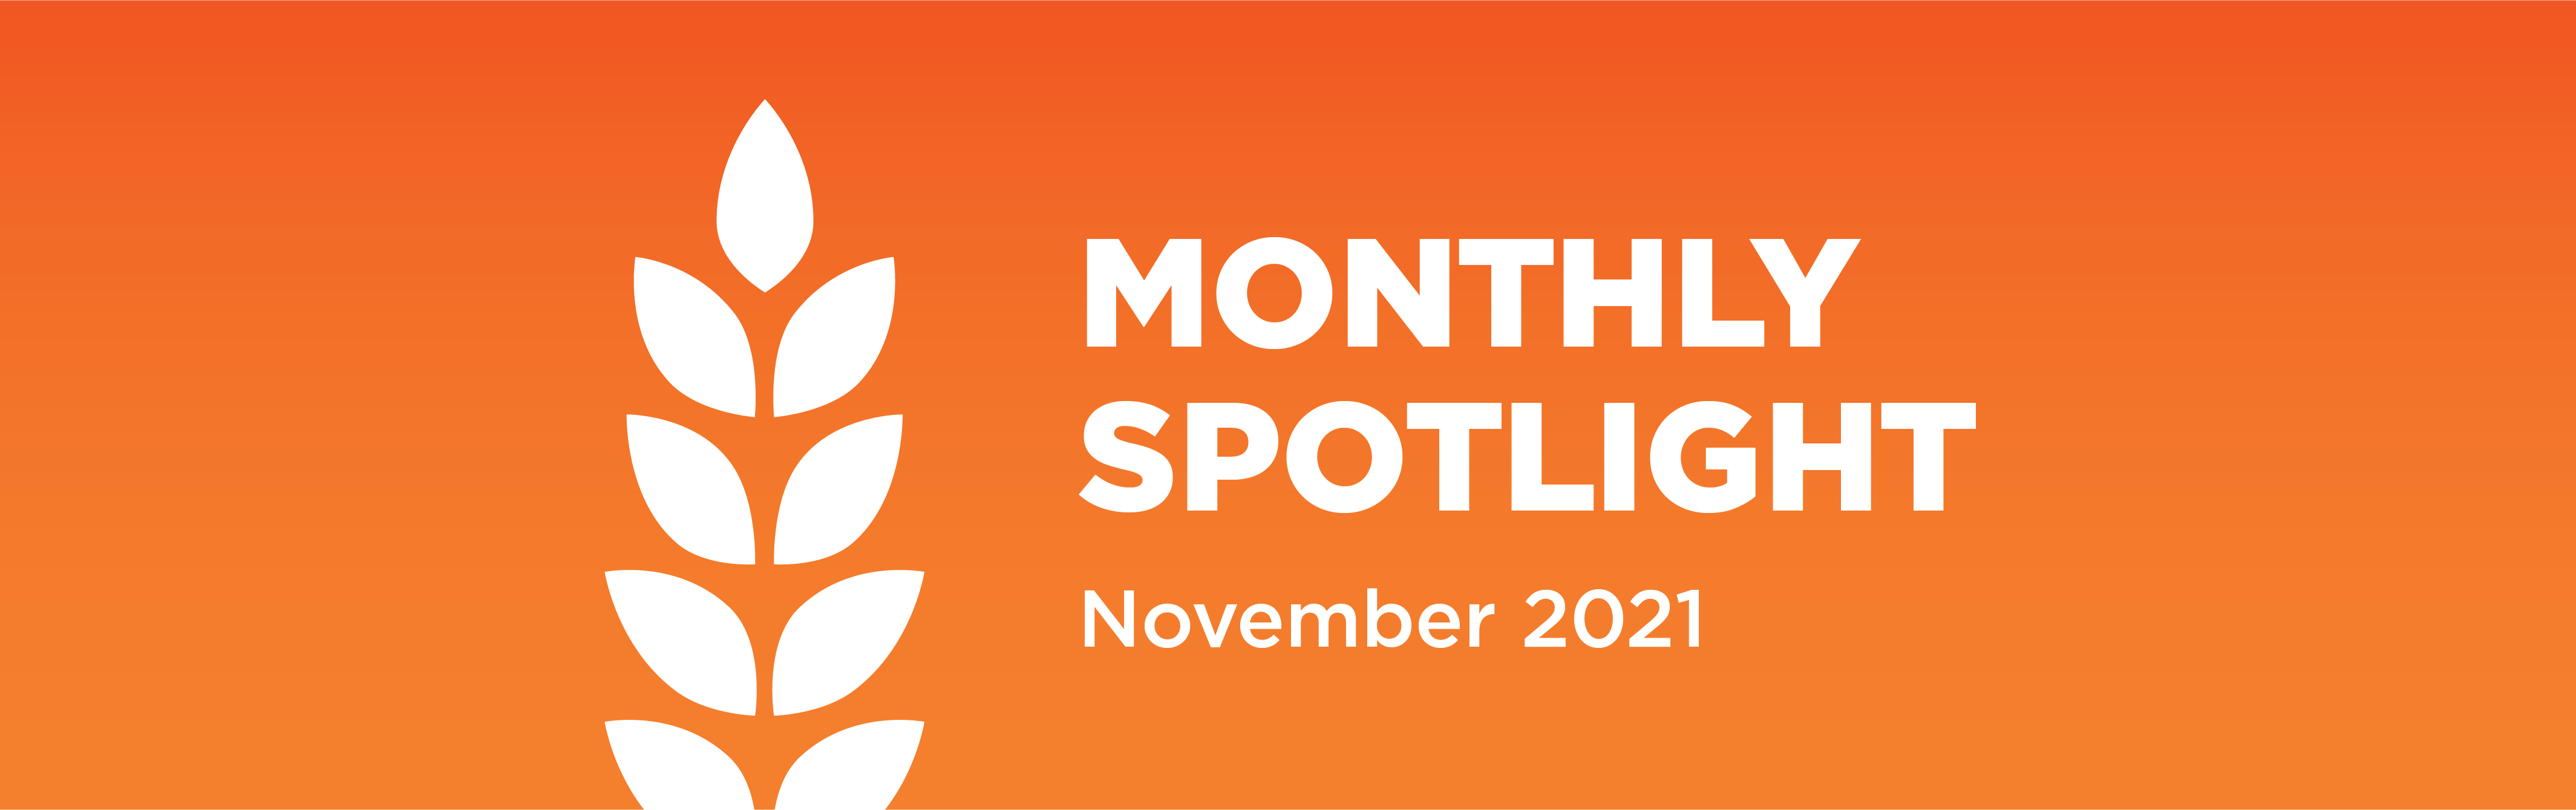 Feeding South Florida’s Monthly Spotlight: November